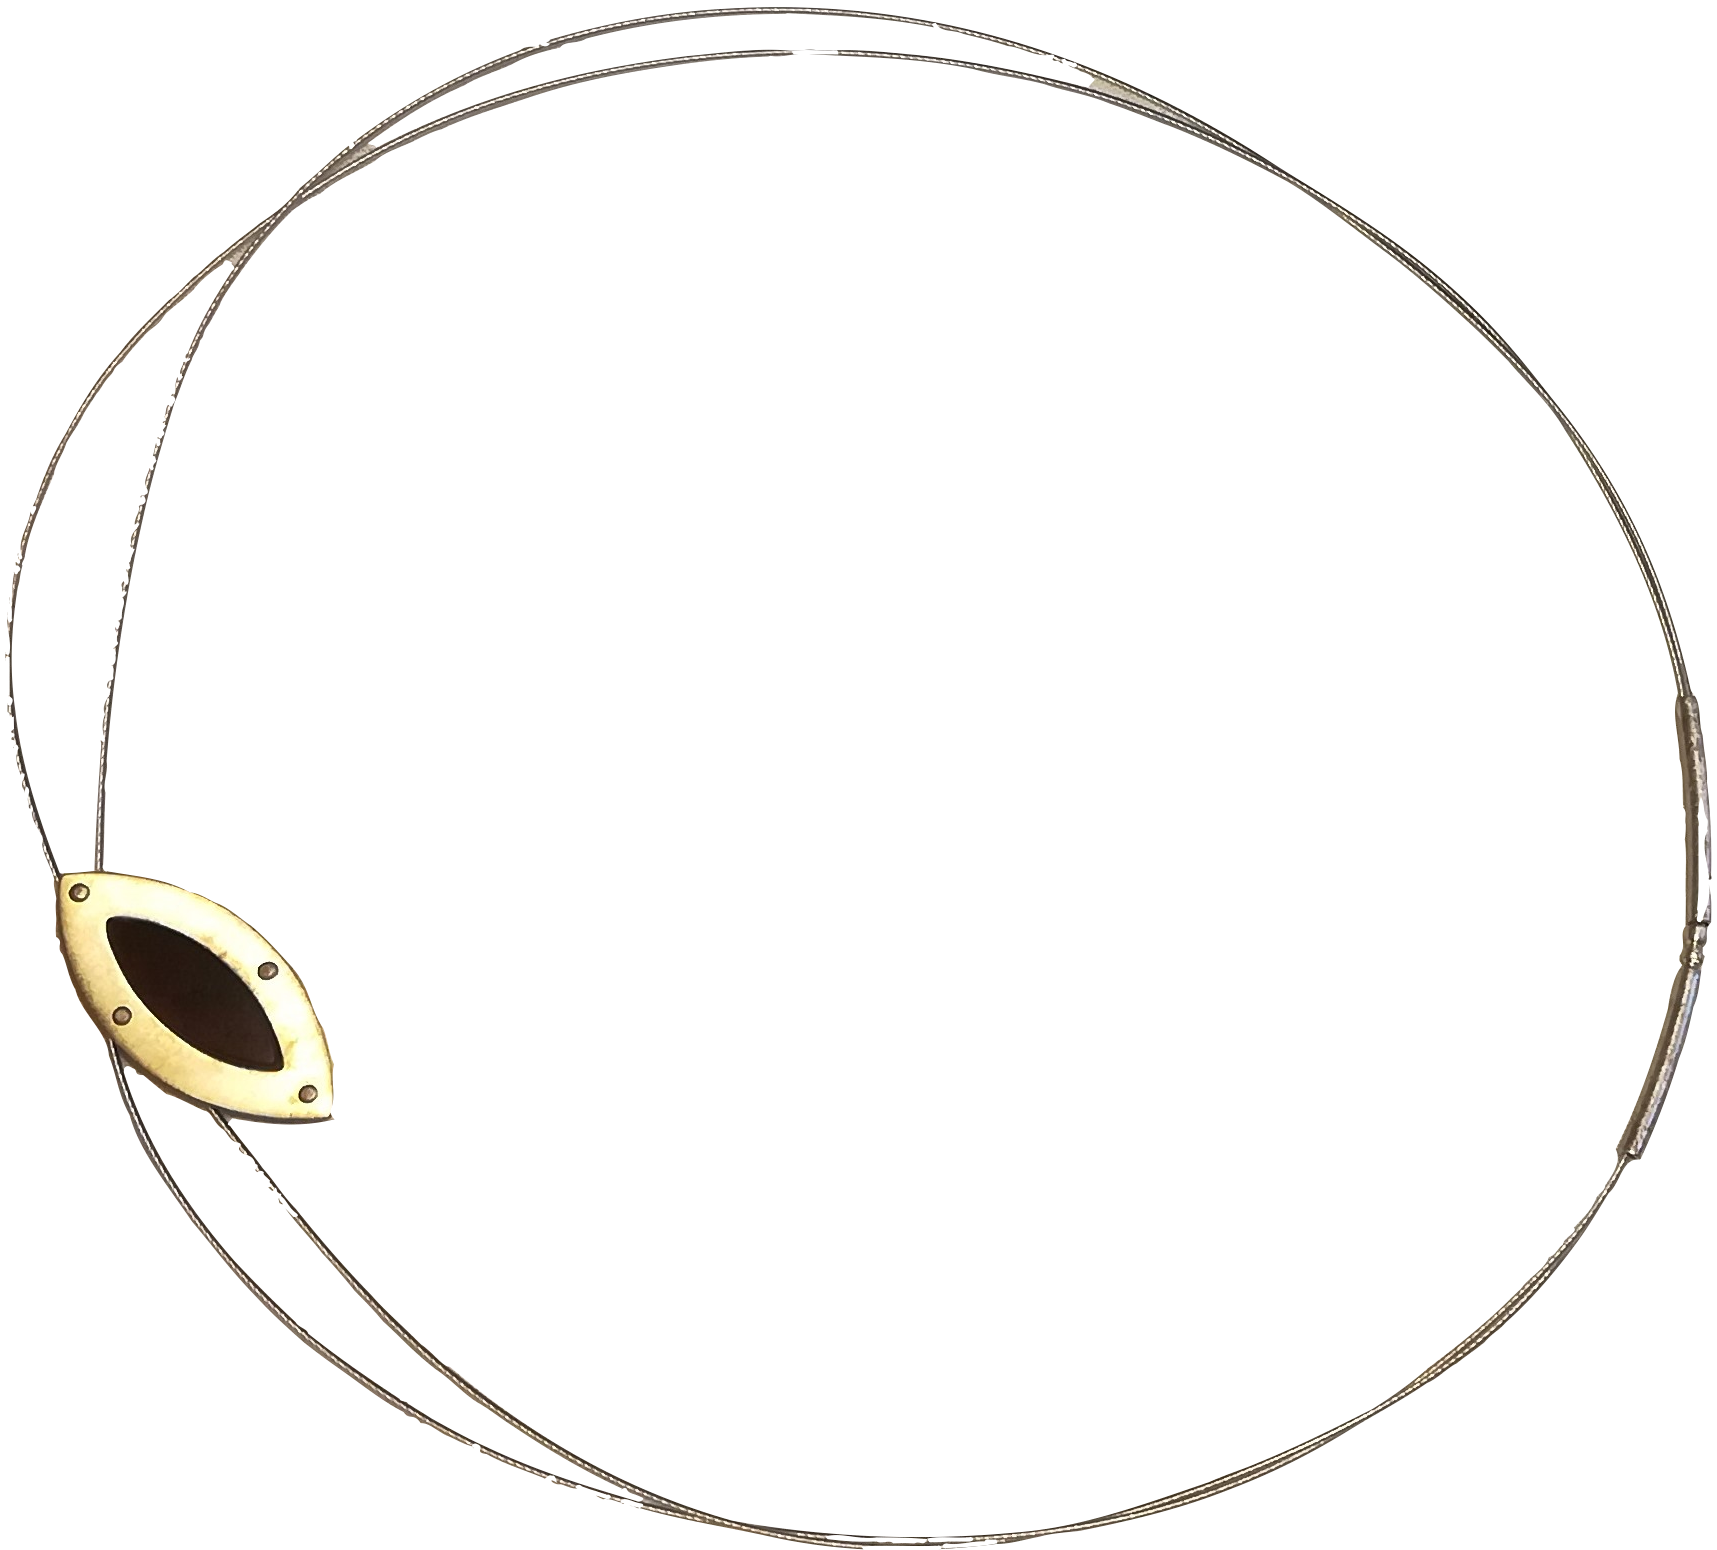 Genuine amber leaf necklace on a sterling silver string